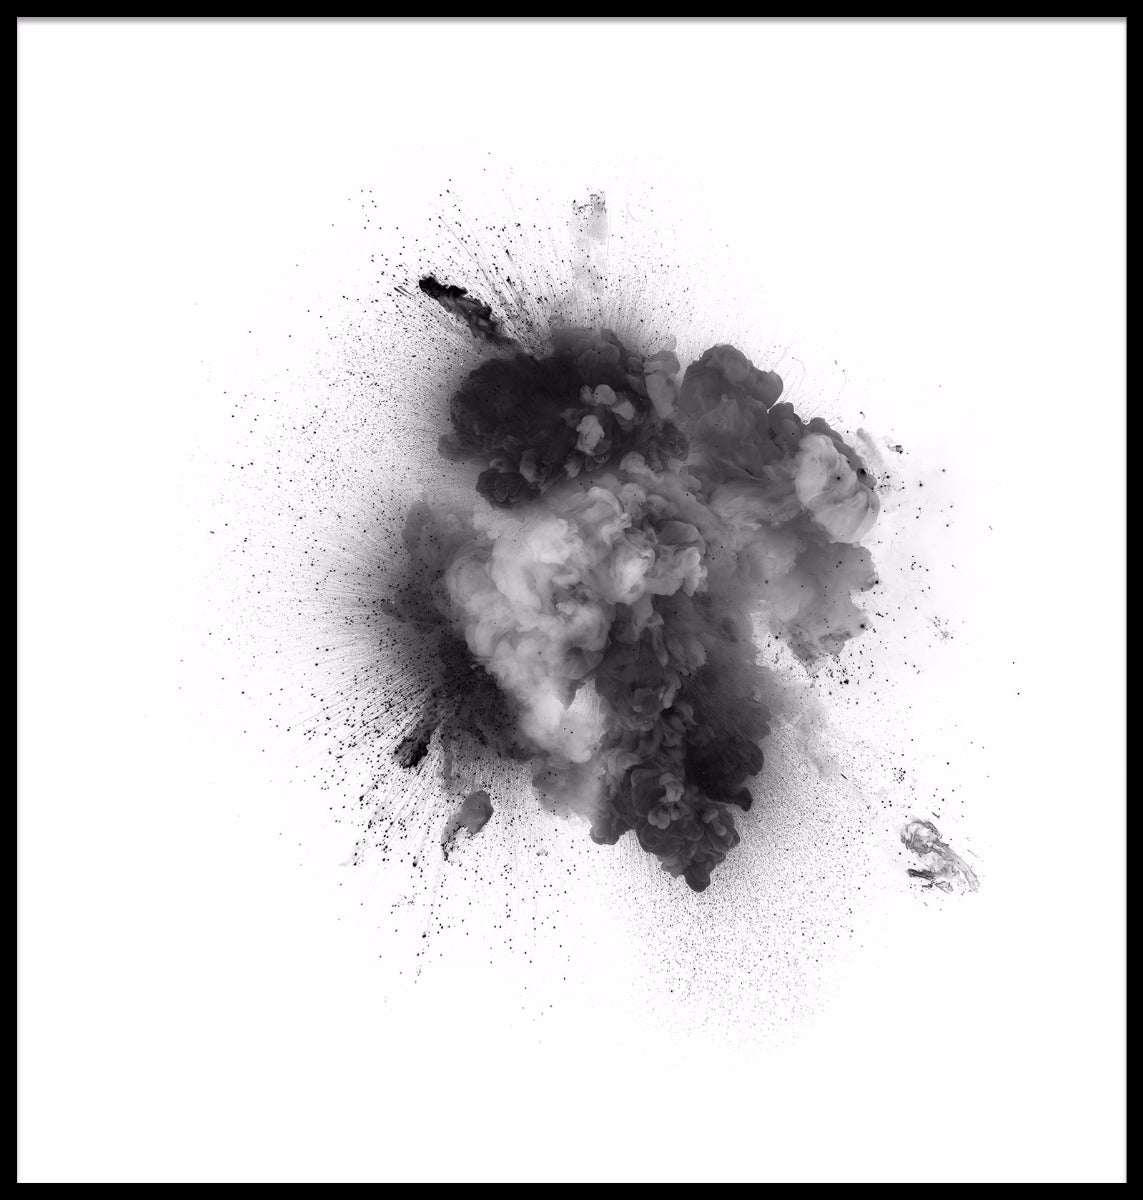  Schwarzes Explosions-Illustrationsplakat